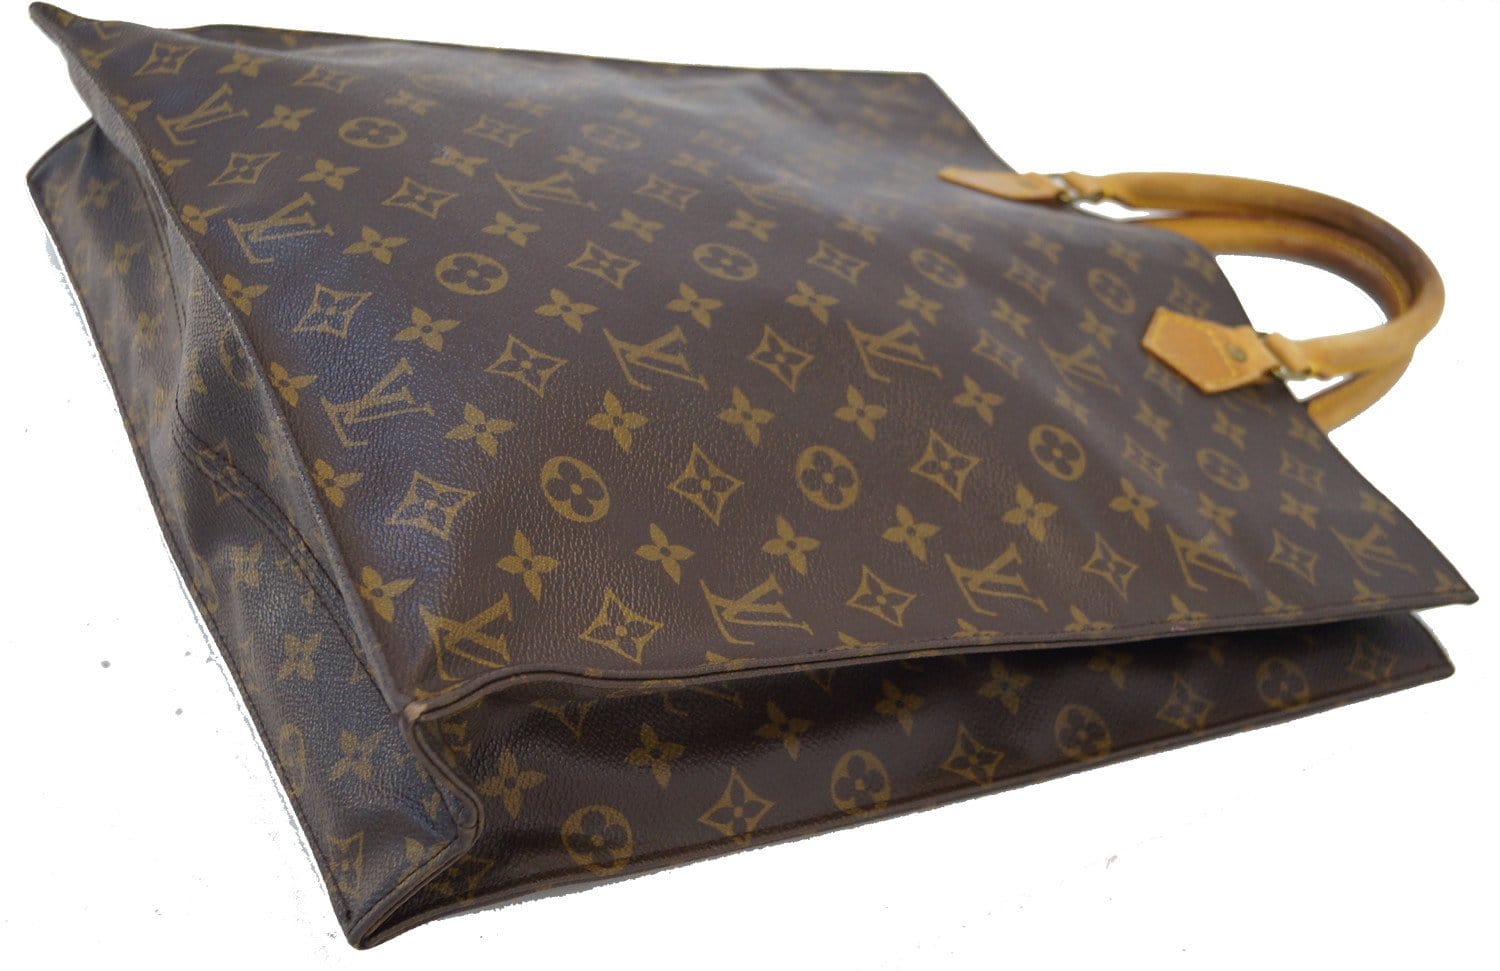 Louis Vuitton Vintage 70s Sac Plat Tote Bag